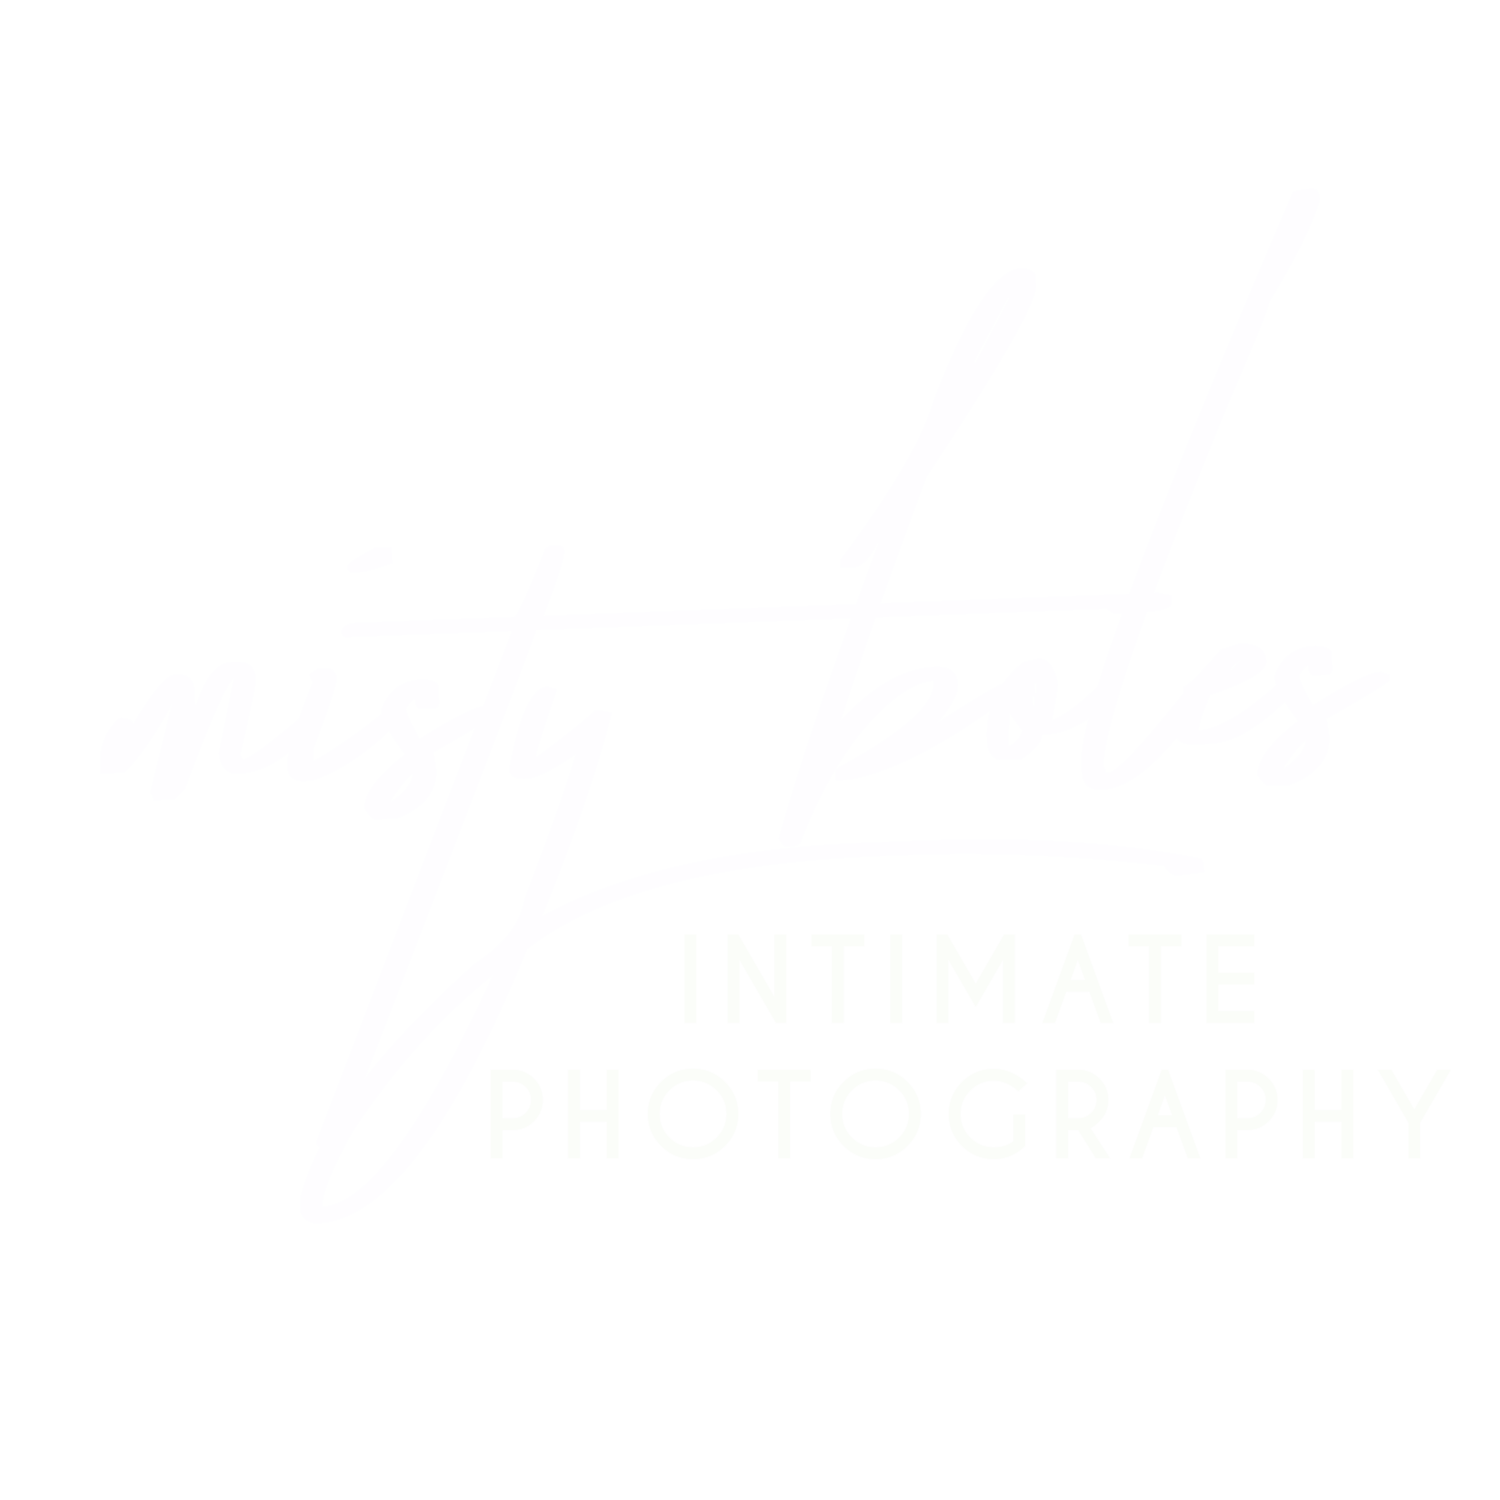 Montana's Largest Intimate Photography Studio